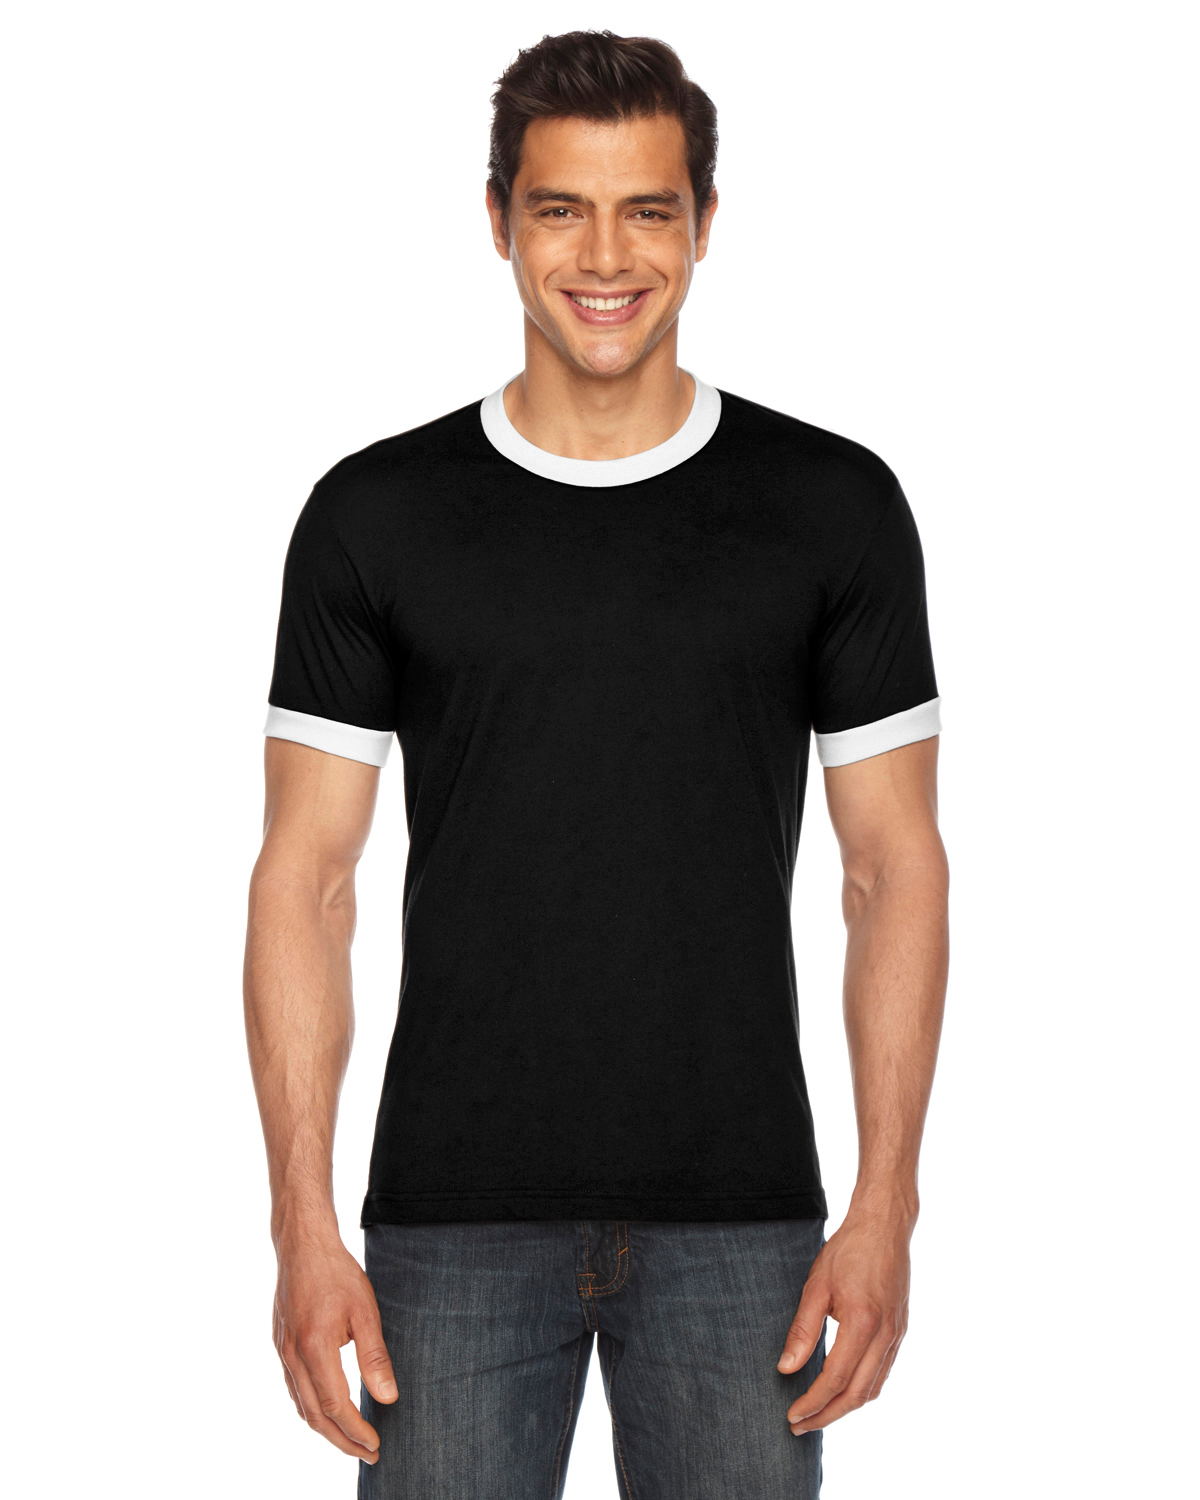 American Apparel BB410W - Unisex Poly-Cotton Short-Sleeve Ringer T-Shirt